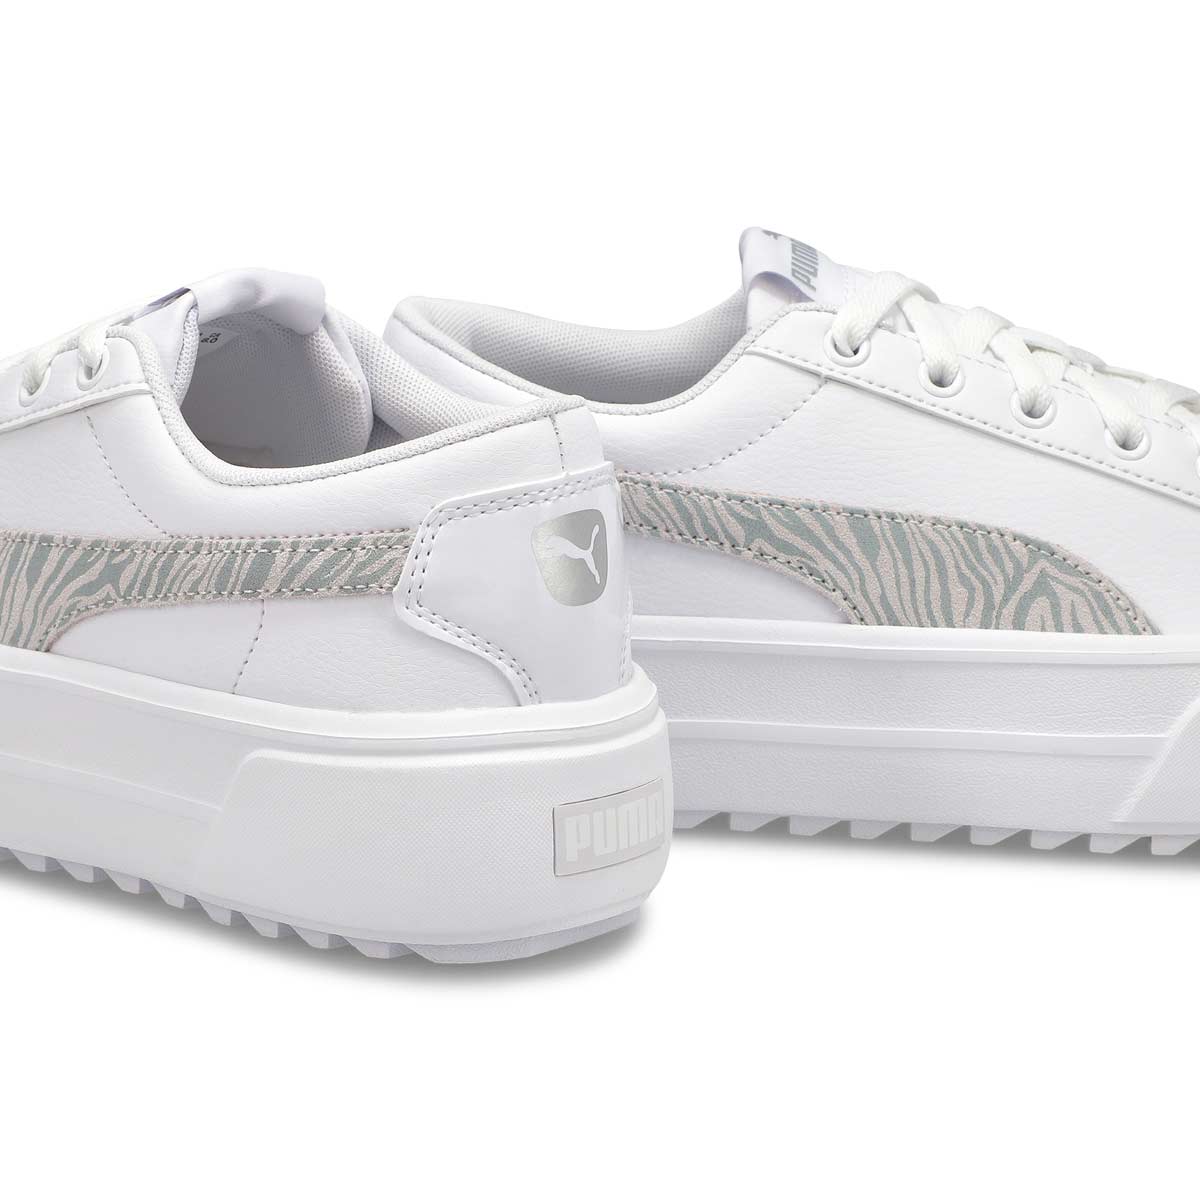 Women's Puma Kaia Tiger Platform Sneaker - White